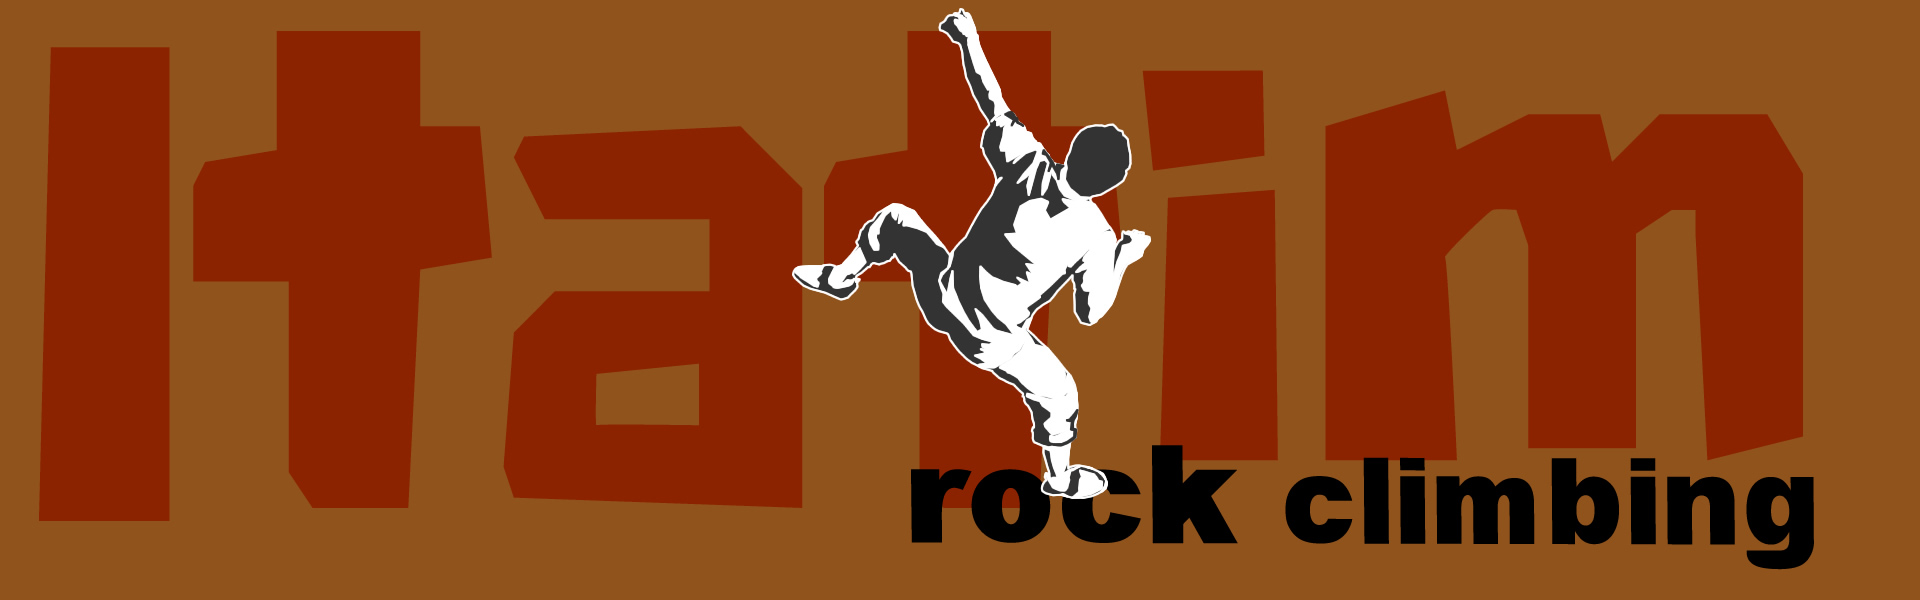 Banner - Itatim rock climbing